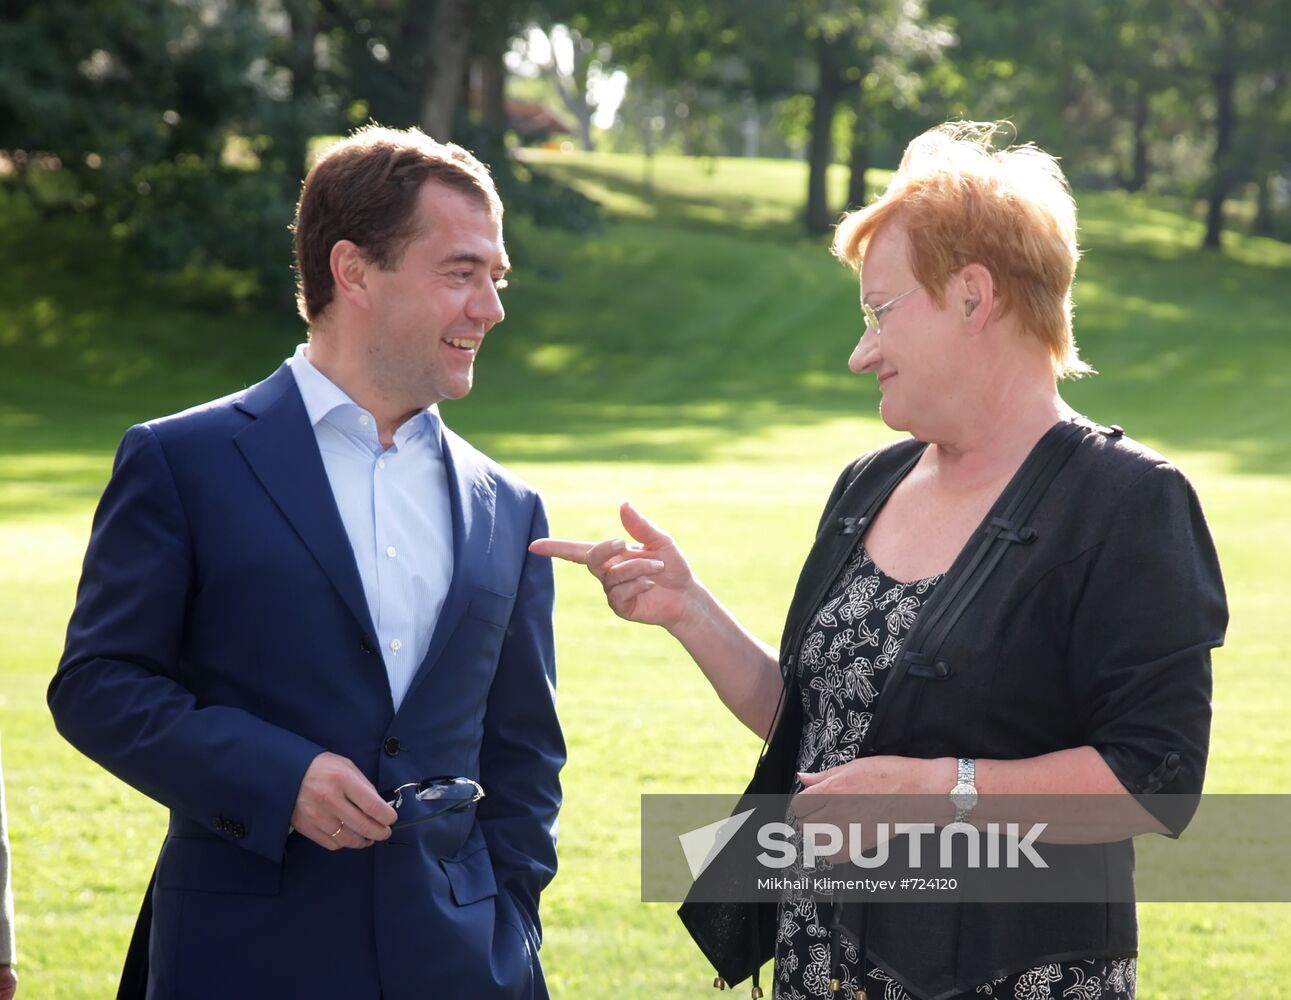 Dmitry Medvedev's business trip to Finland